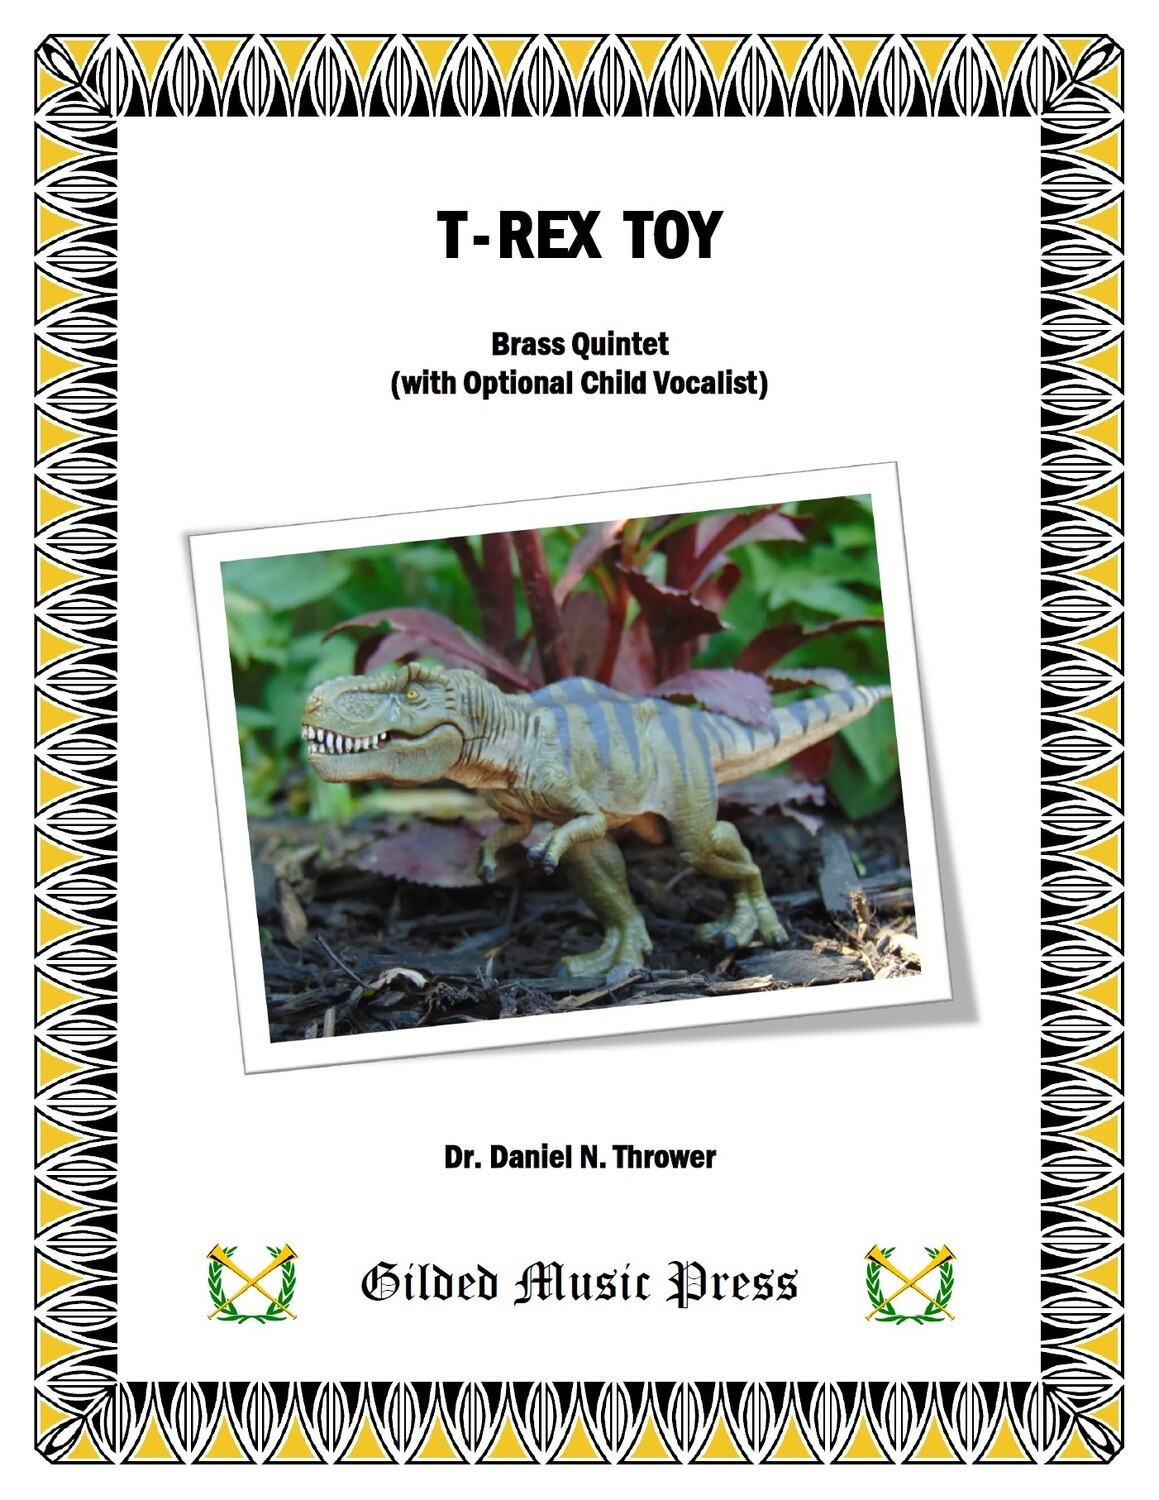 GMP 3048: T-Rex Toy (Brass Quintet & Optional Child Vocalist), Dr. Daniel Thrower